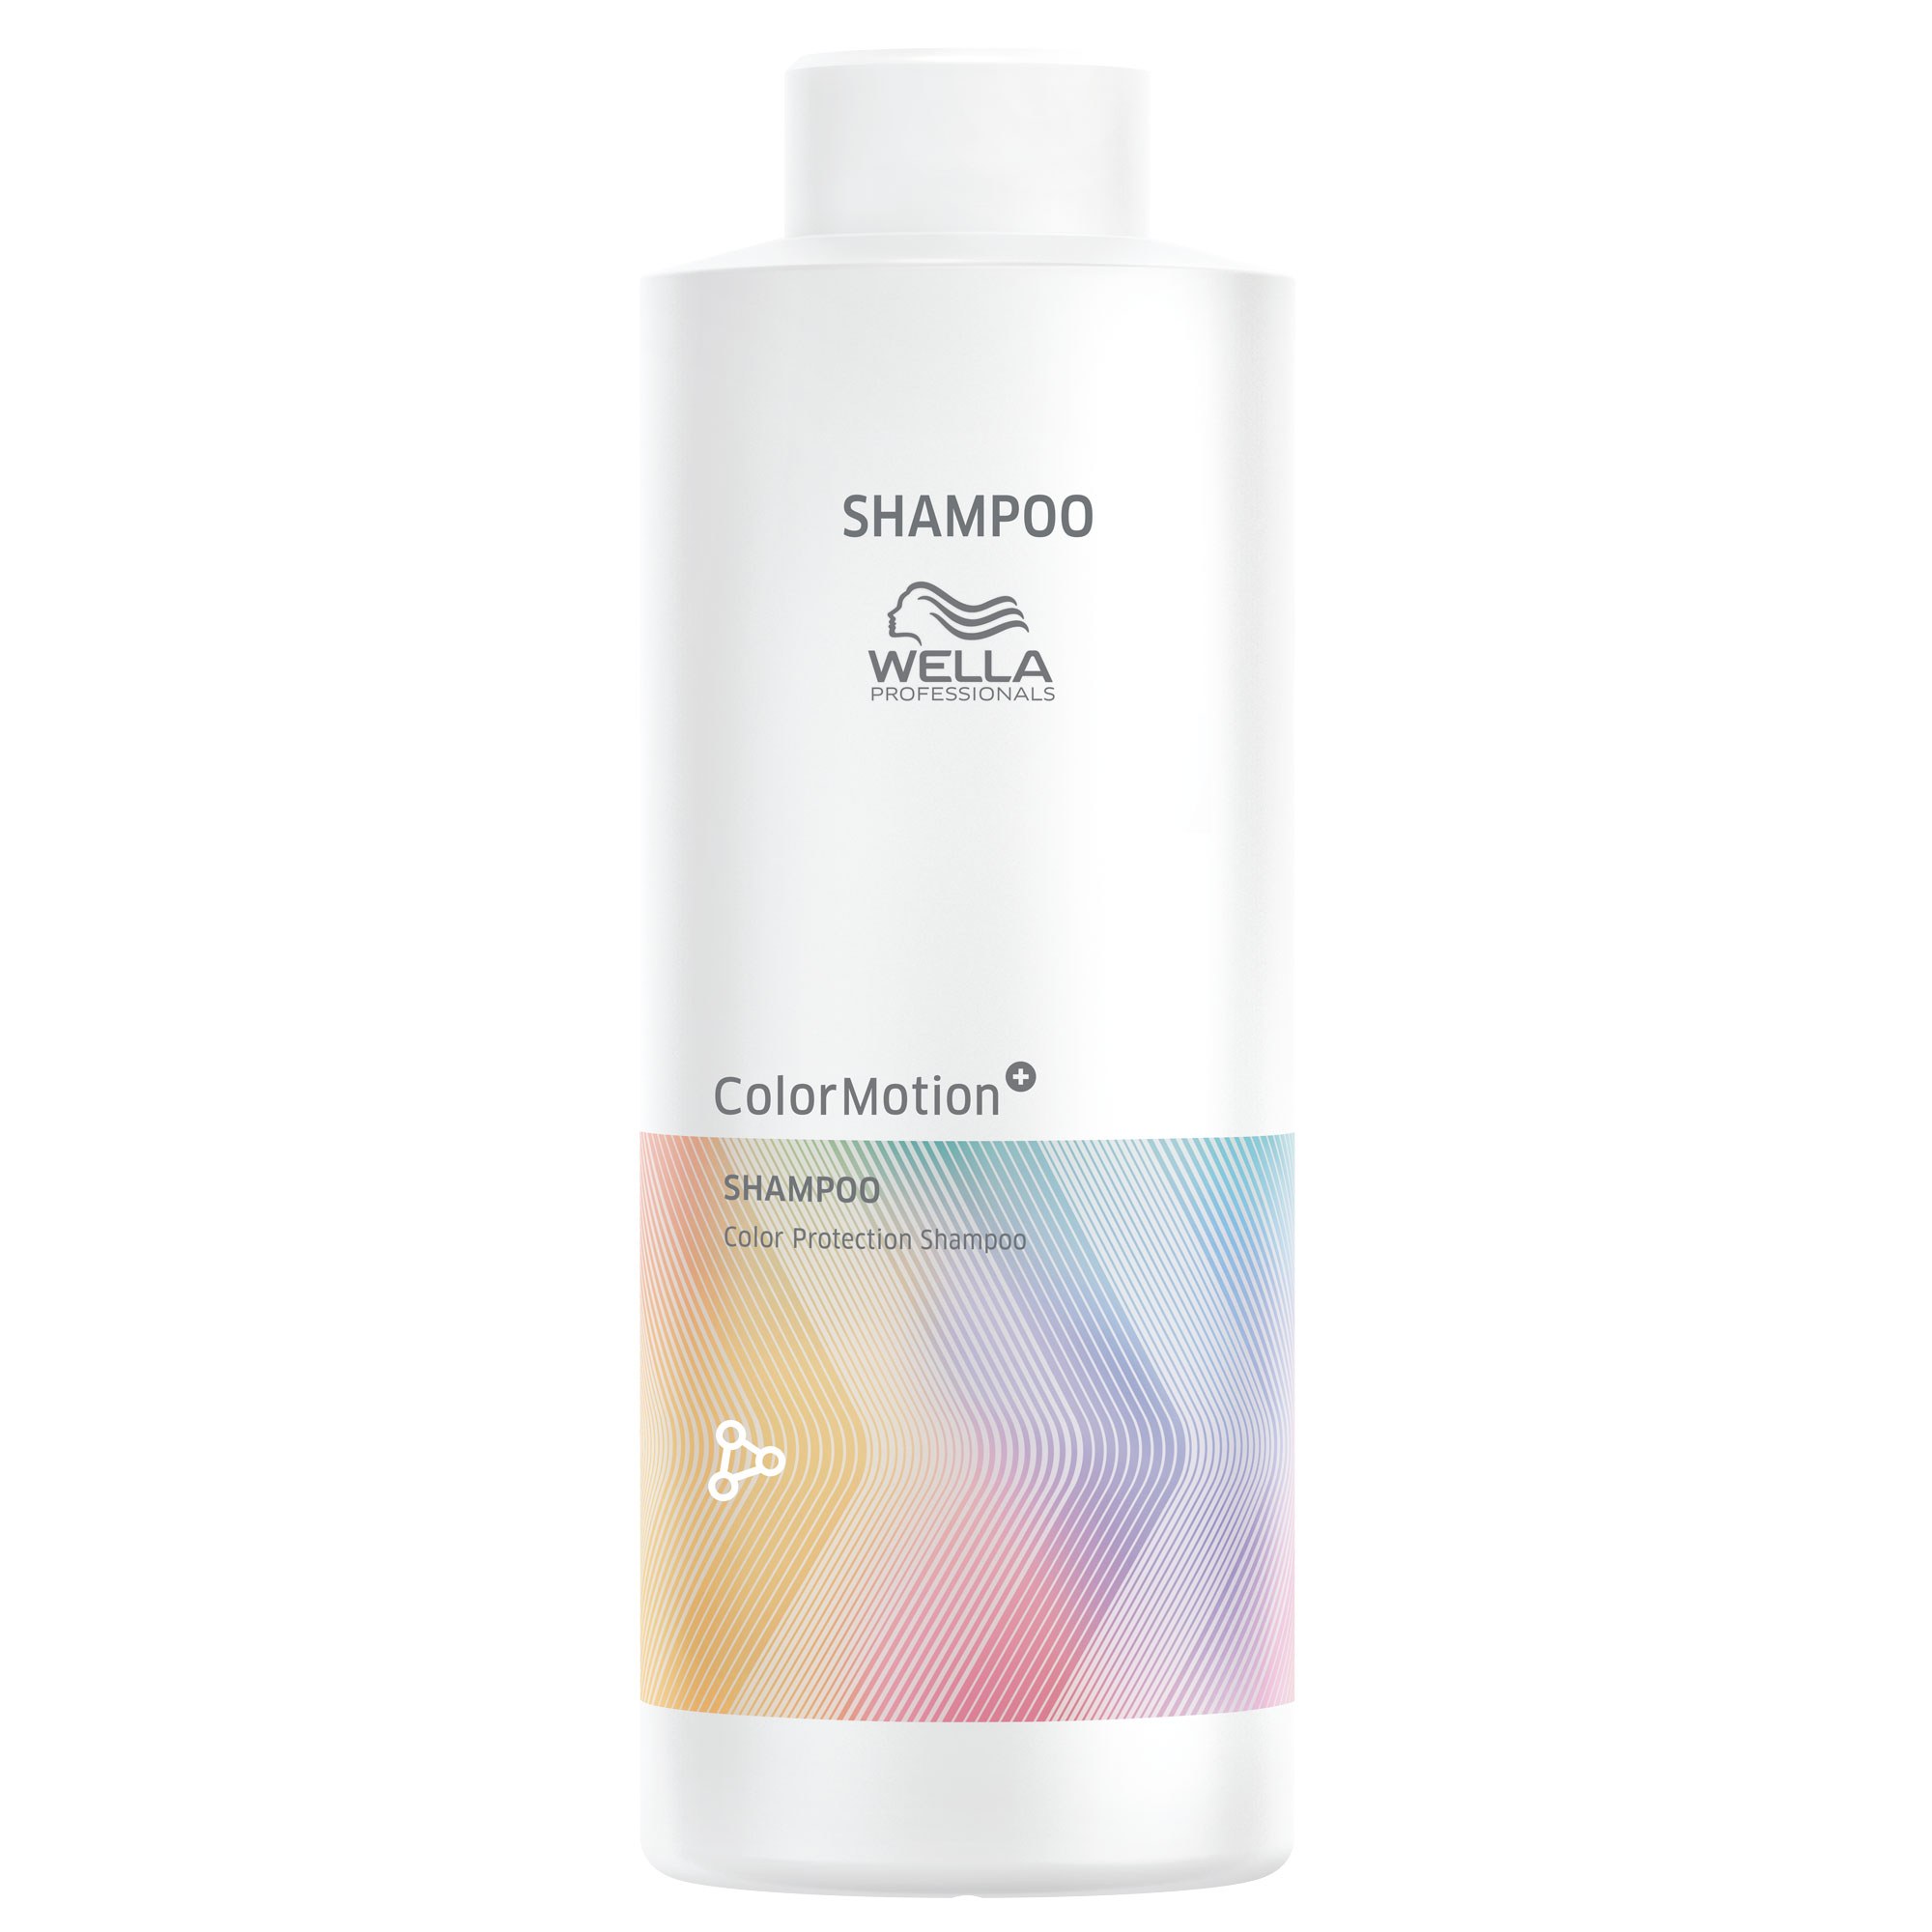 Wella ColorMotion+ Shampoo 1liter